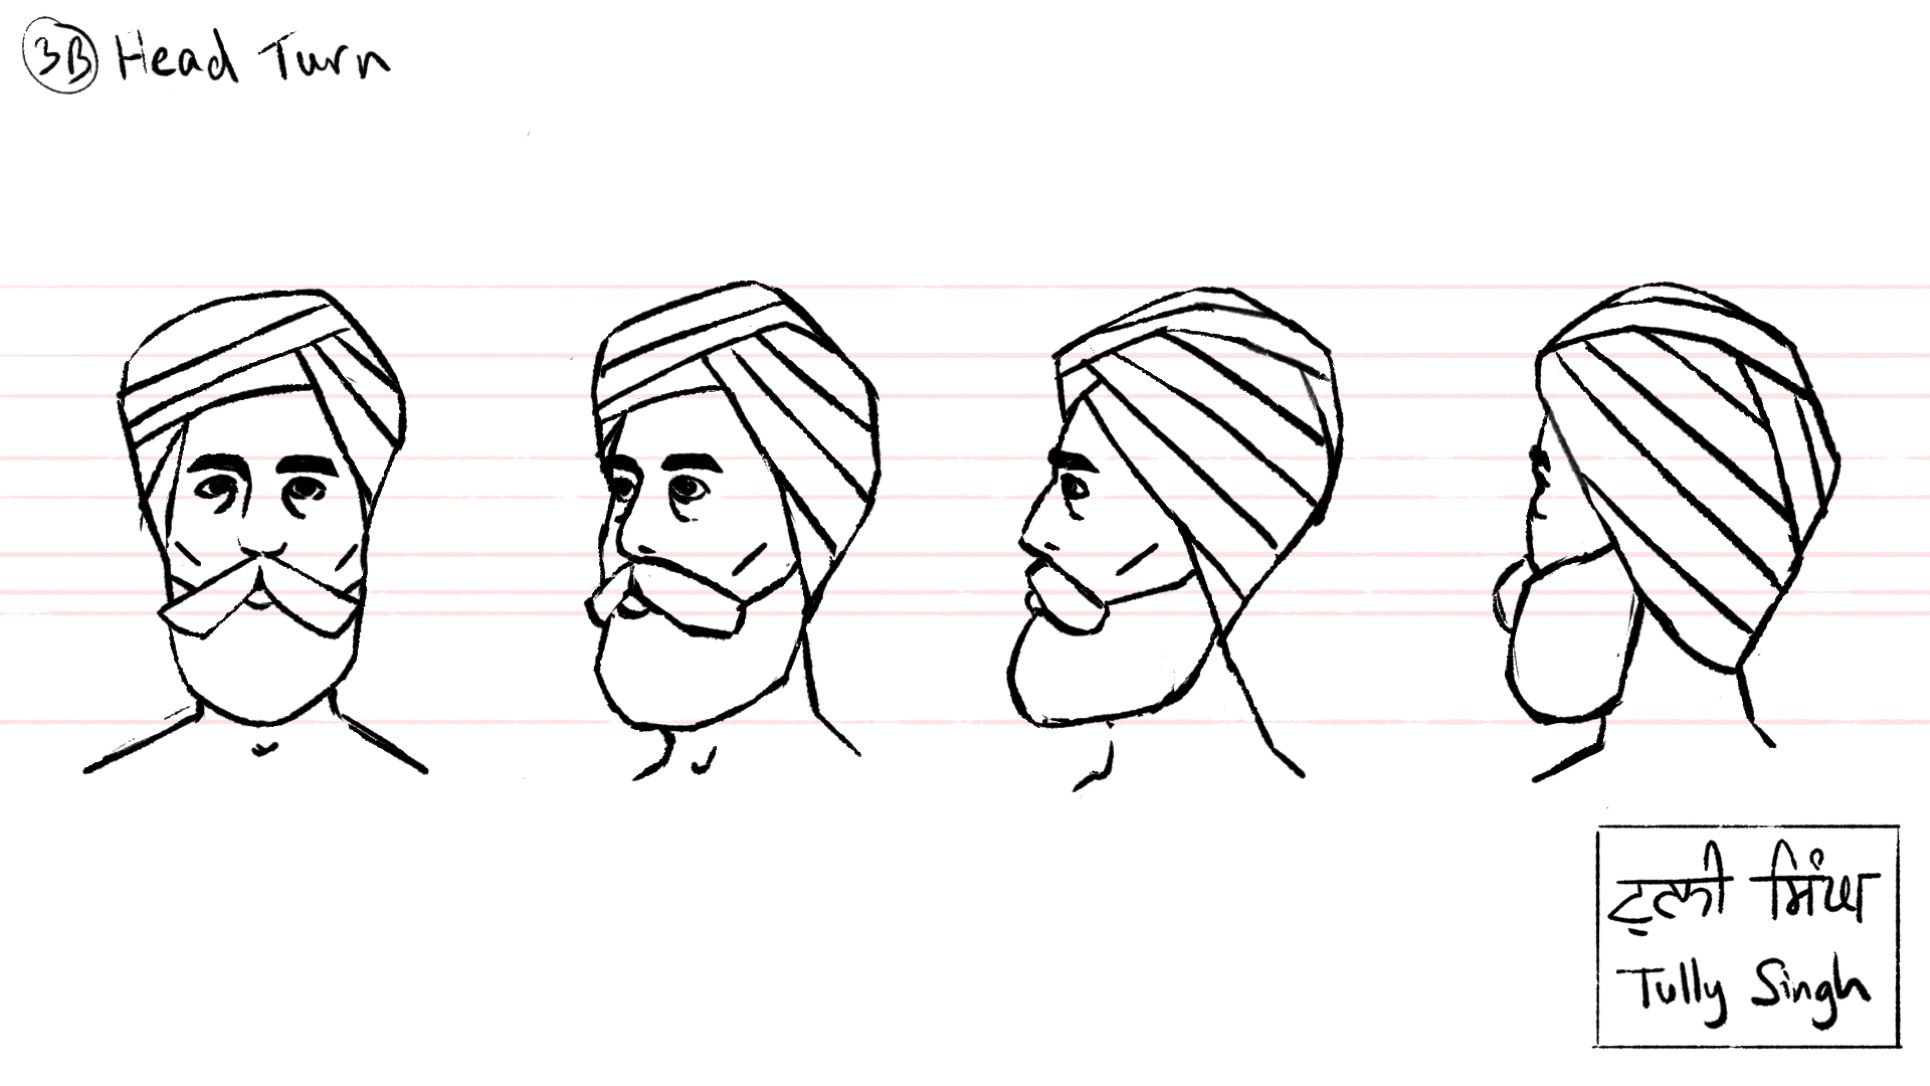 Character Head Turn - With Turban